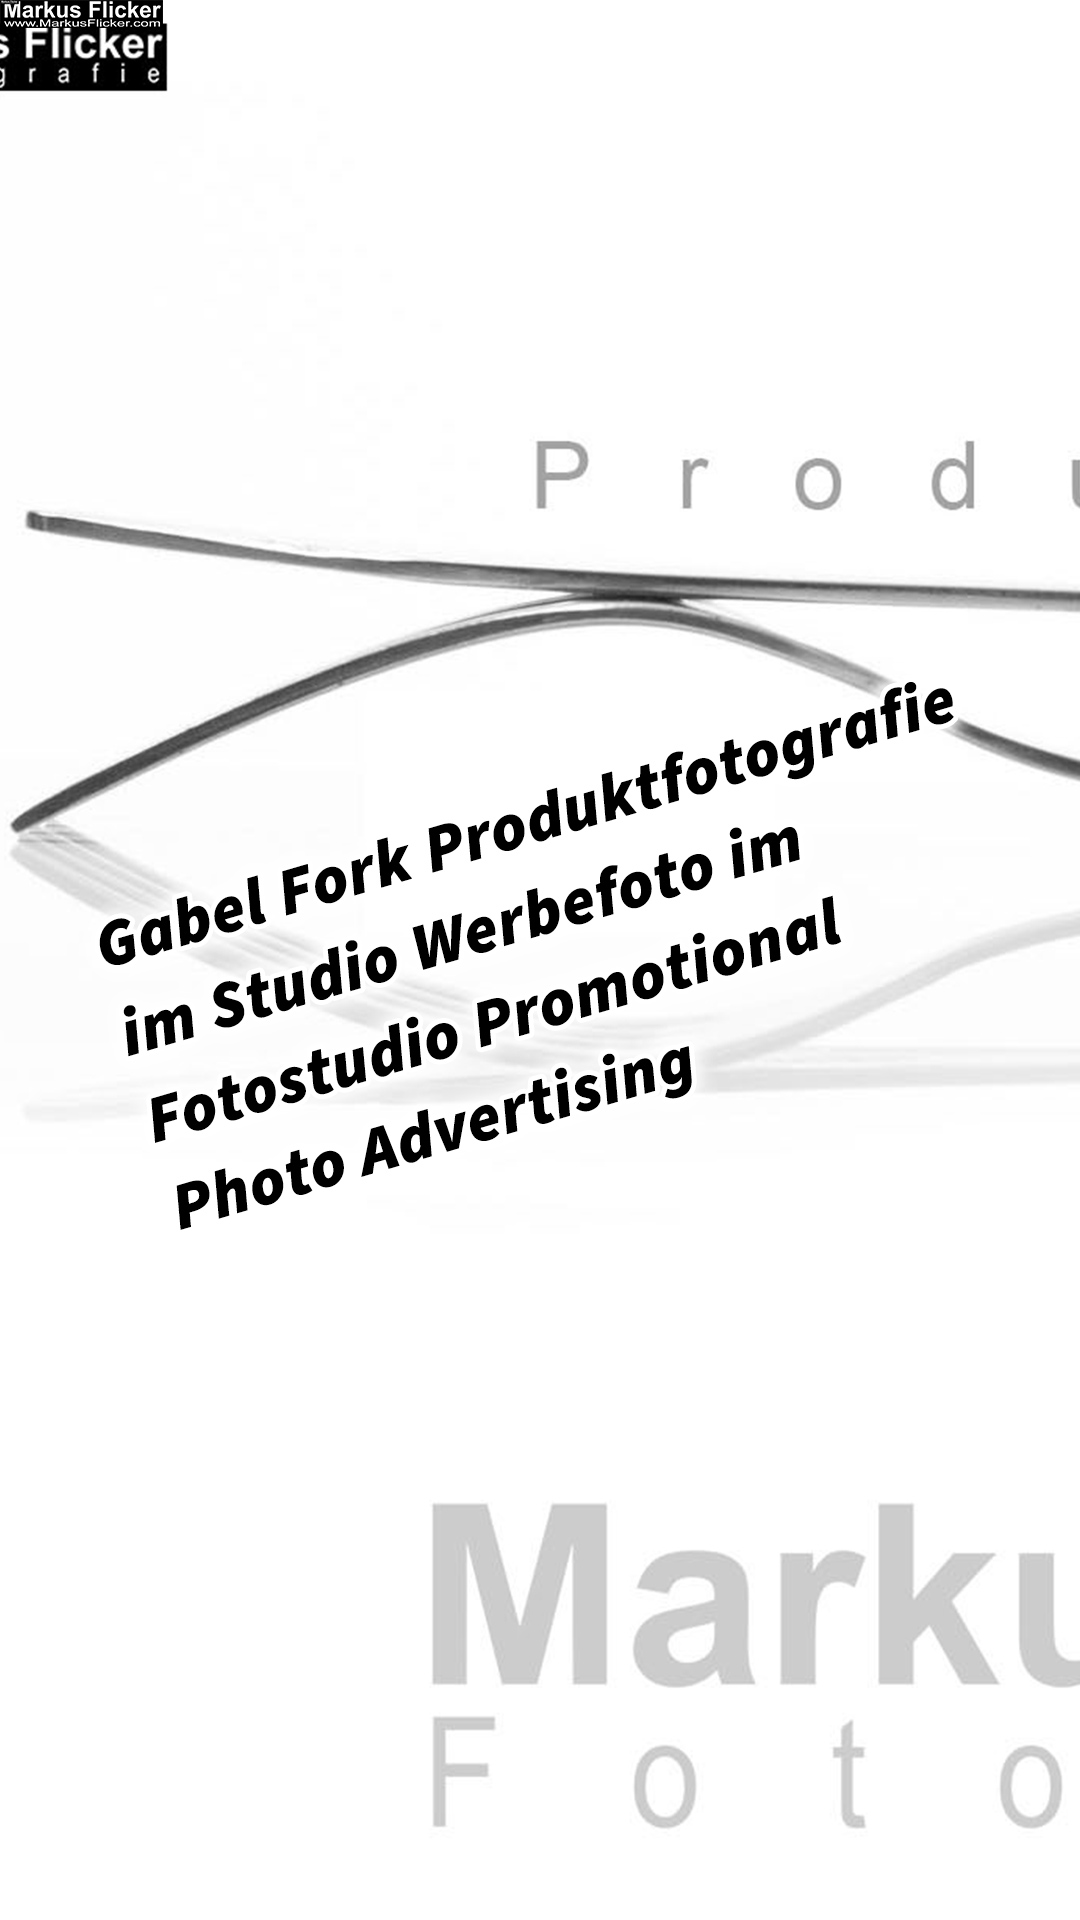 Gabel Fork Produktfotografie im Studio Werbefoto im Fotostudio Promotional Photo Advertising